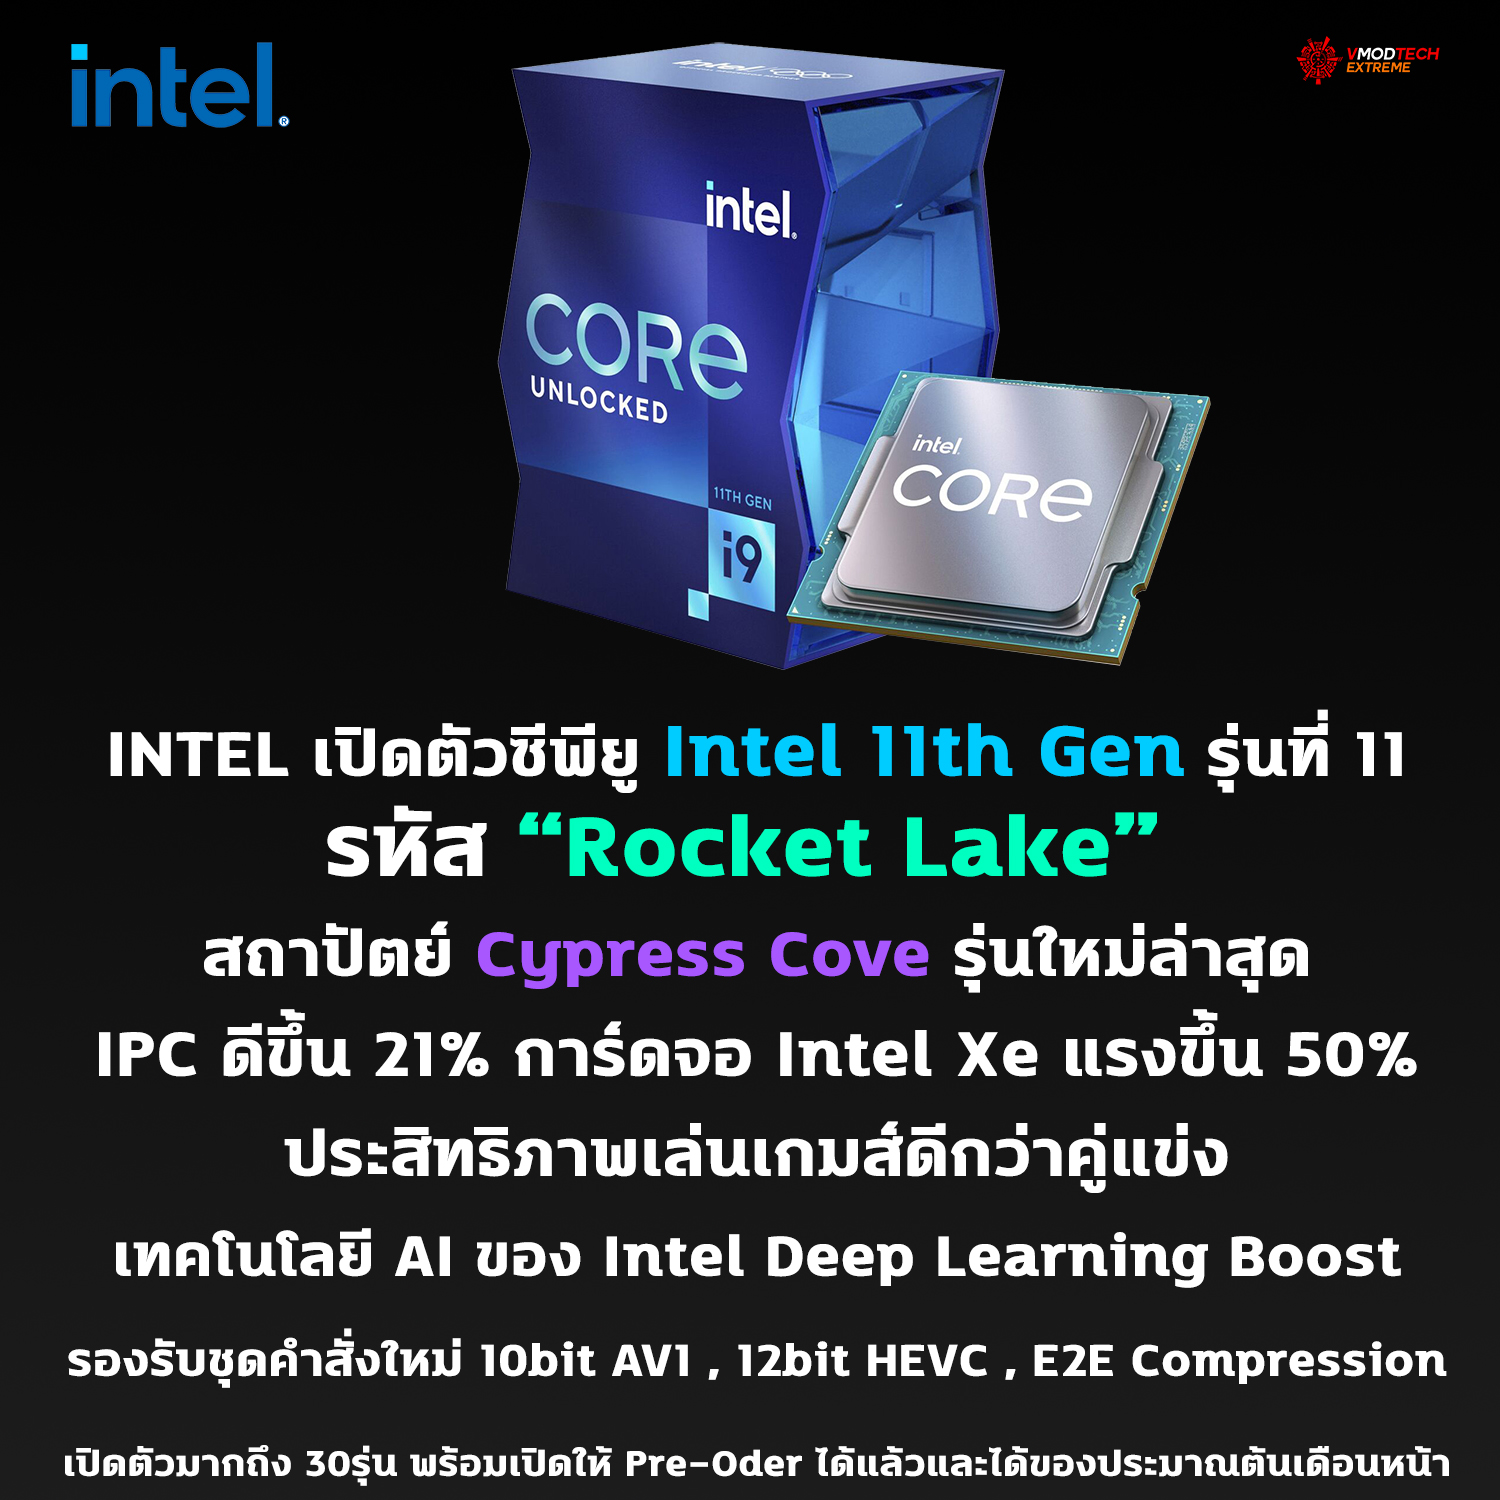 intel 11th gen rocket lake cypress cove core4 INTEL เปิดตัวซีพียู Intel 11th Gen รุ่นที่ 11 ใหม่ล่าสุดในรหัส Rocket Lake สถาปัตย์ Cypress Cove Core รุ่นใหม่ล่าสุดมากถึง 30รุ่น พร้อมเปิดให้ Pre Oder ได้แล้วและได้ของประมาณต้นเดือนหน้า